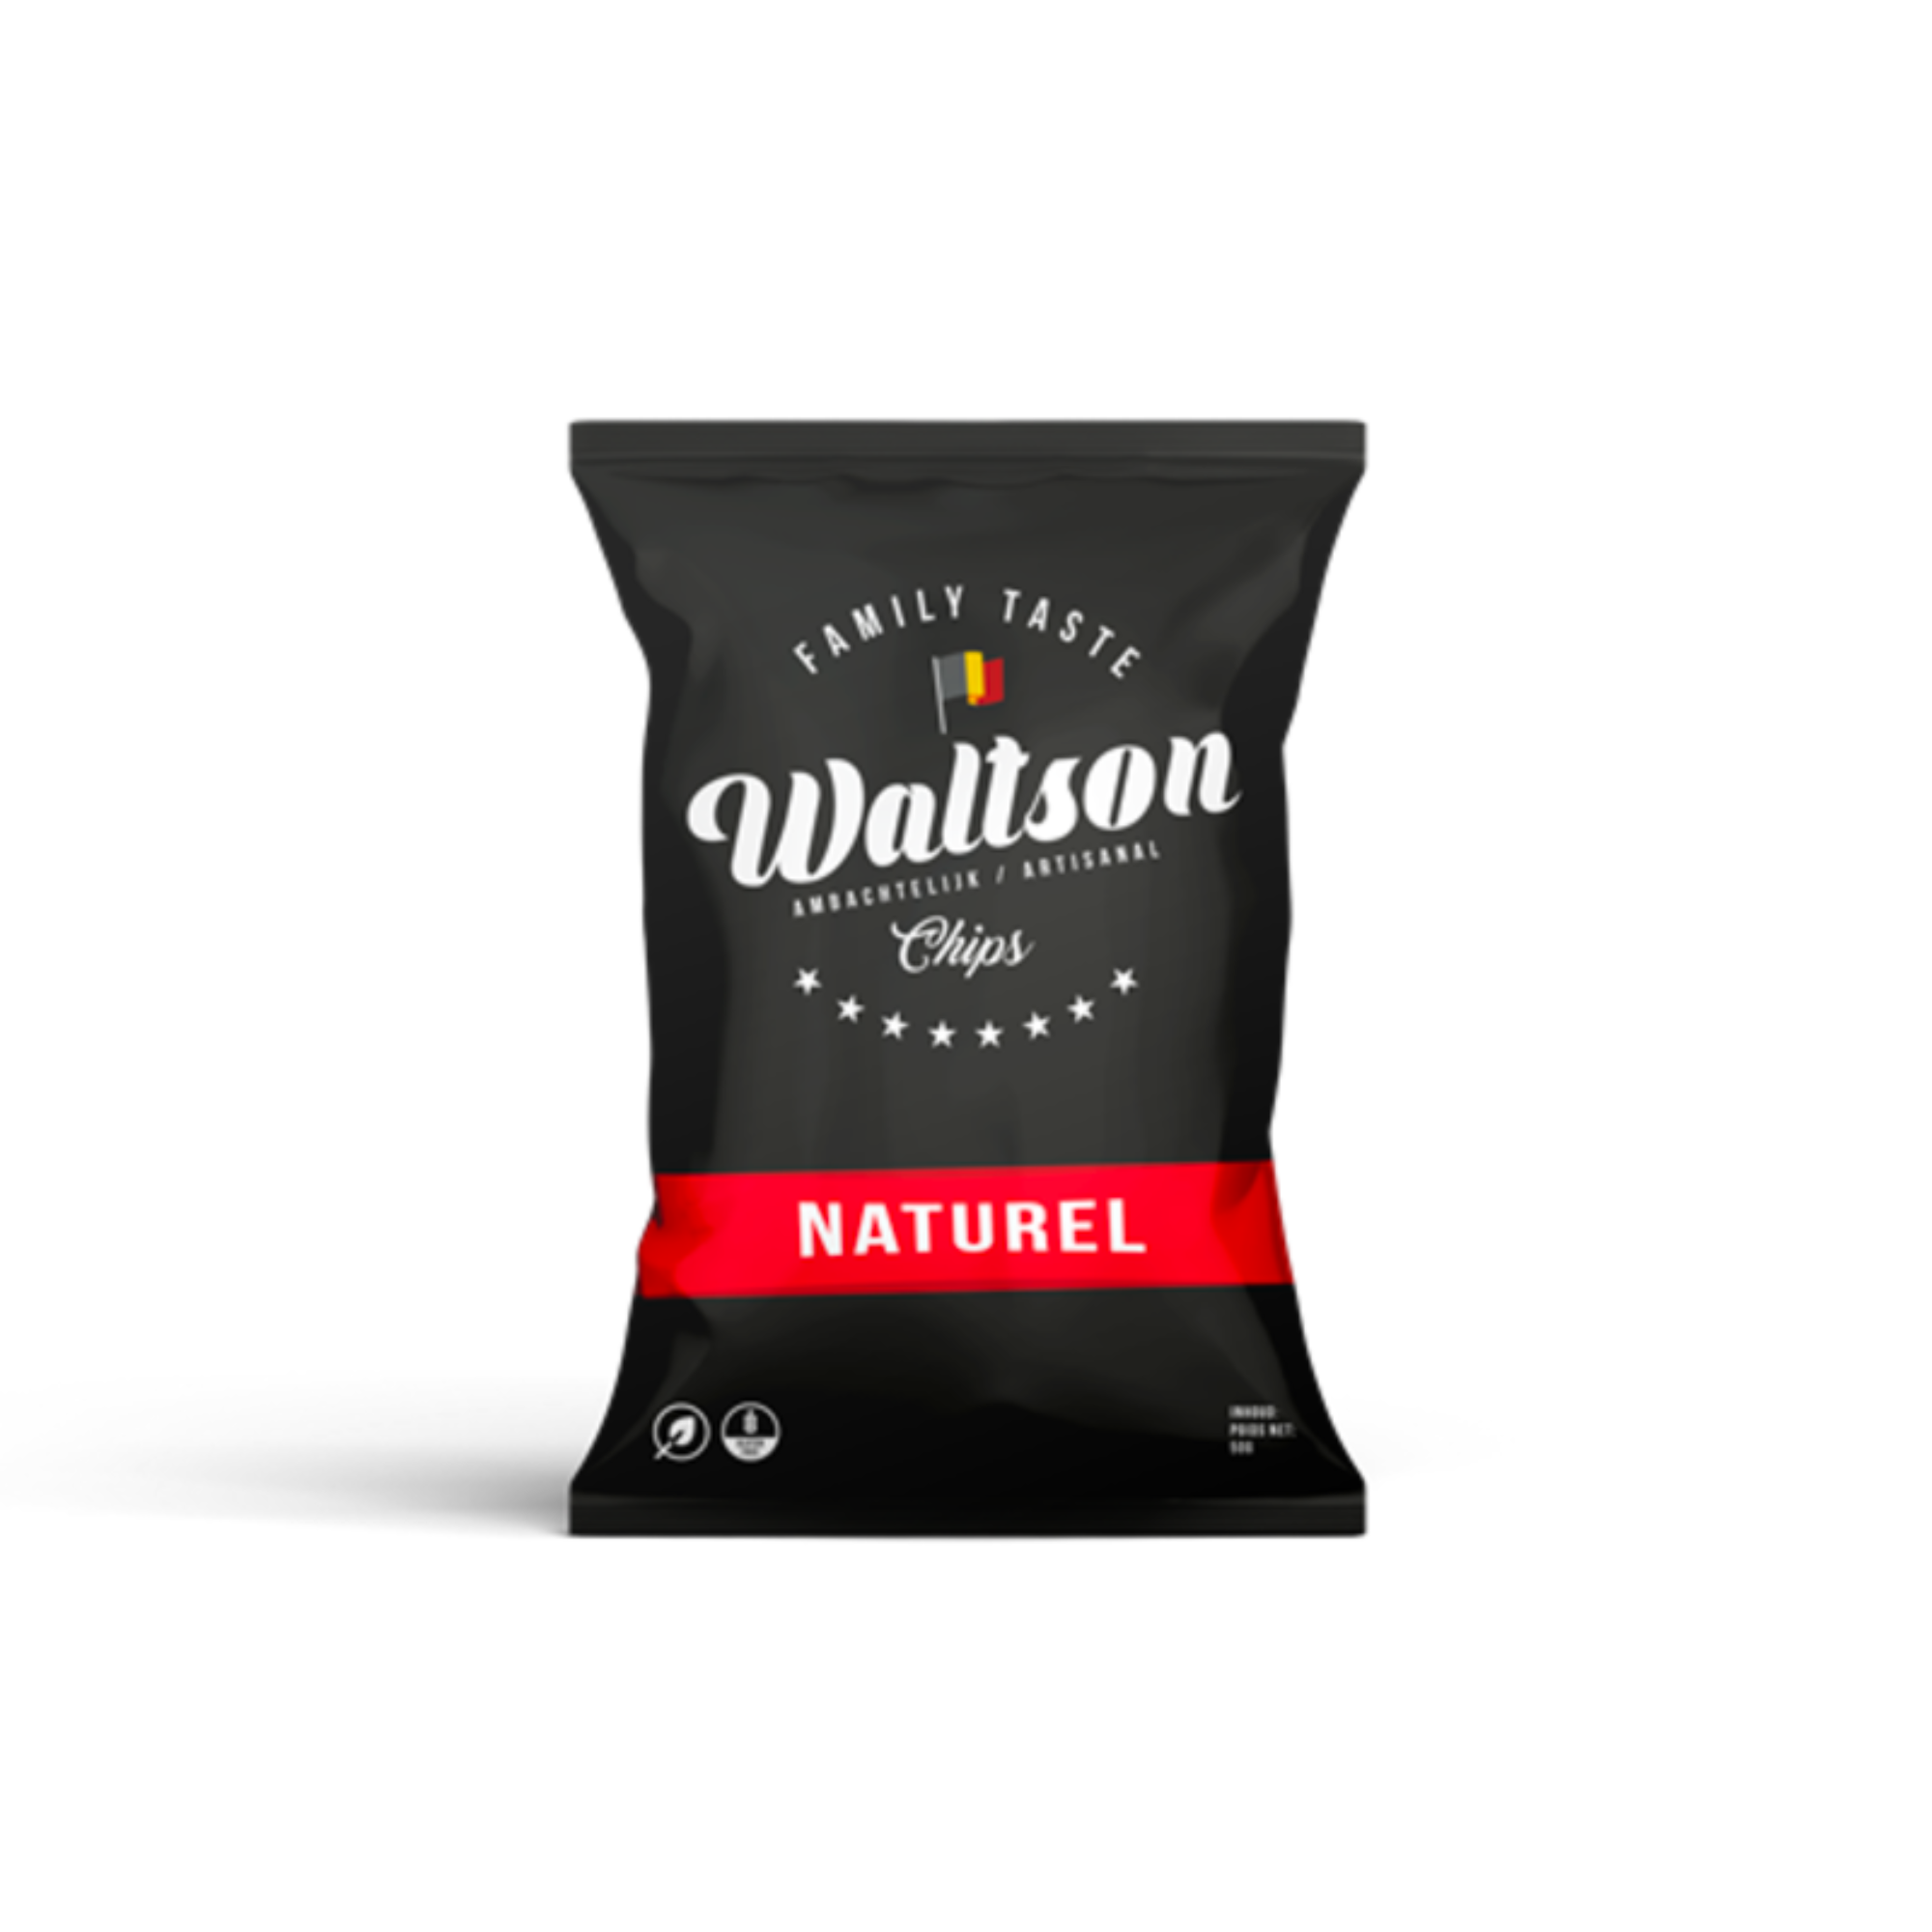 Waltson chips - Naturel (40g)